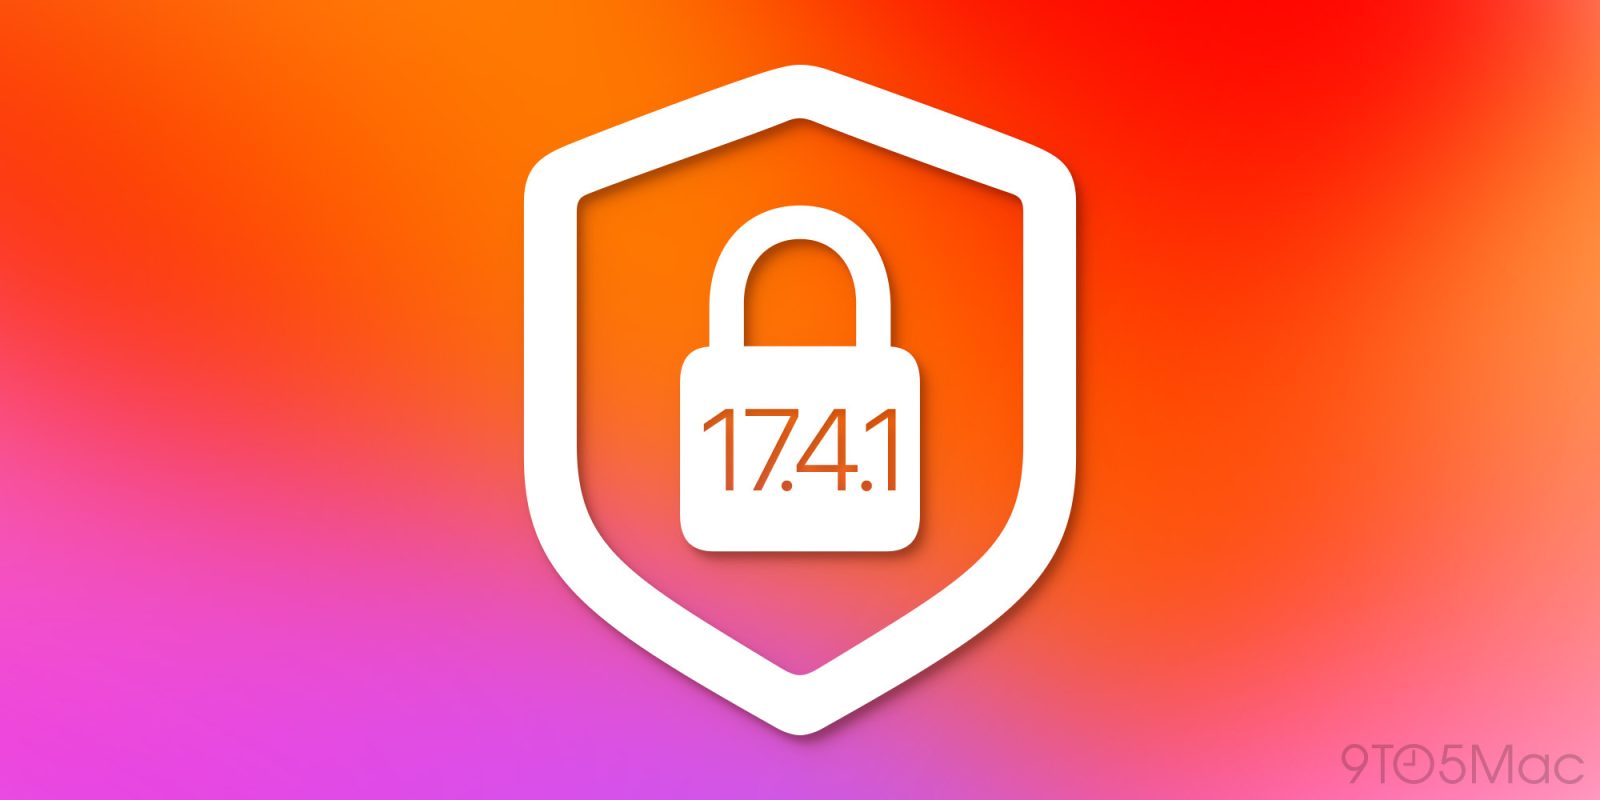 Apple iOS 17.4.1 security fixes